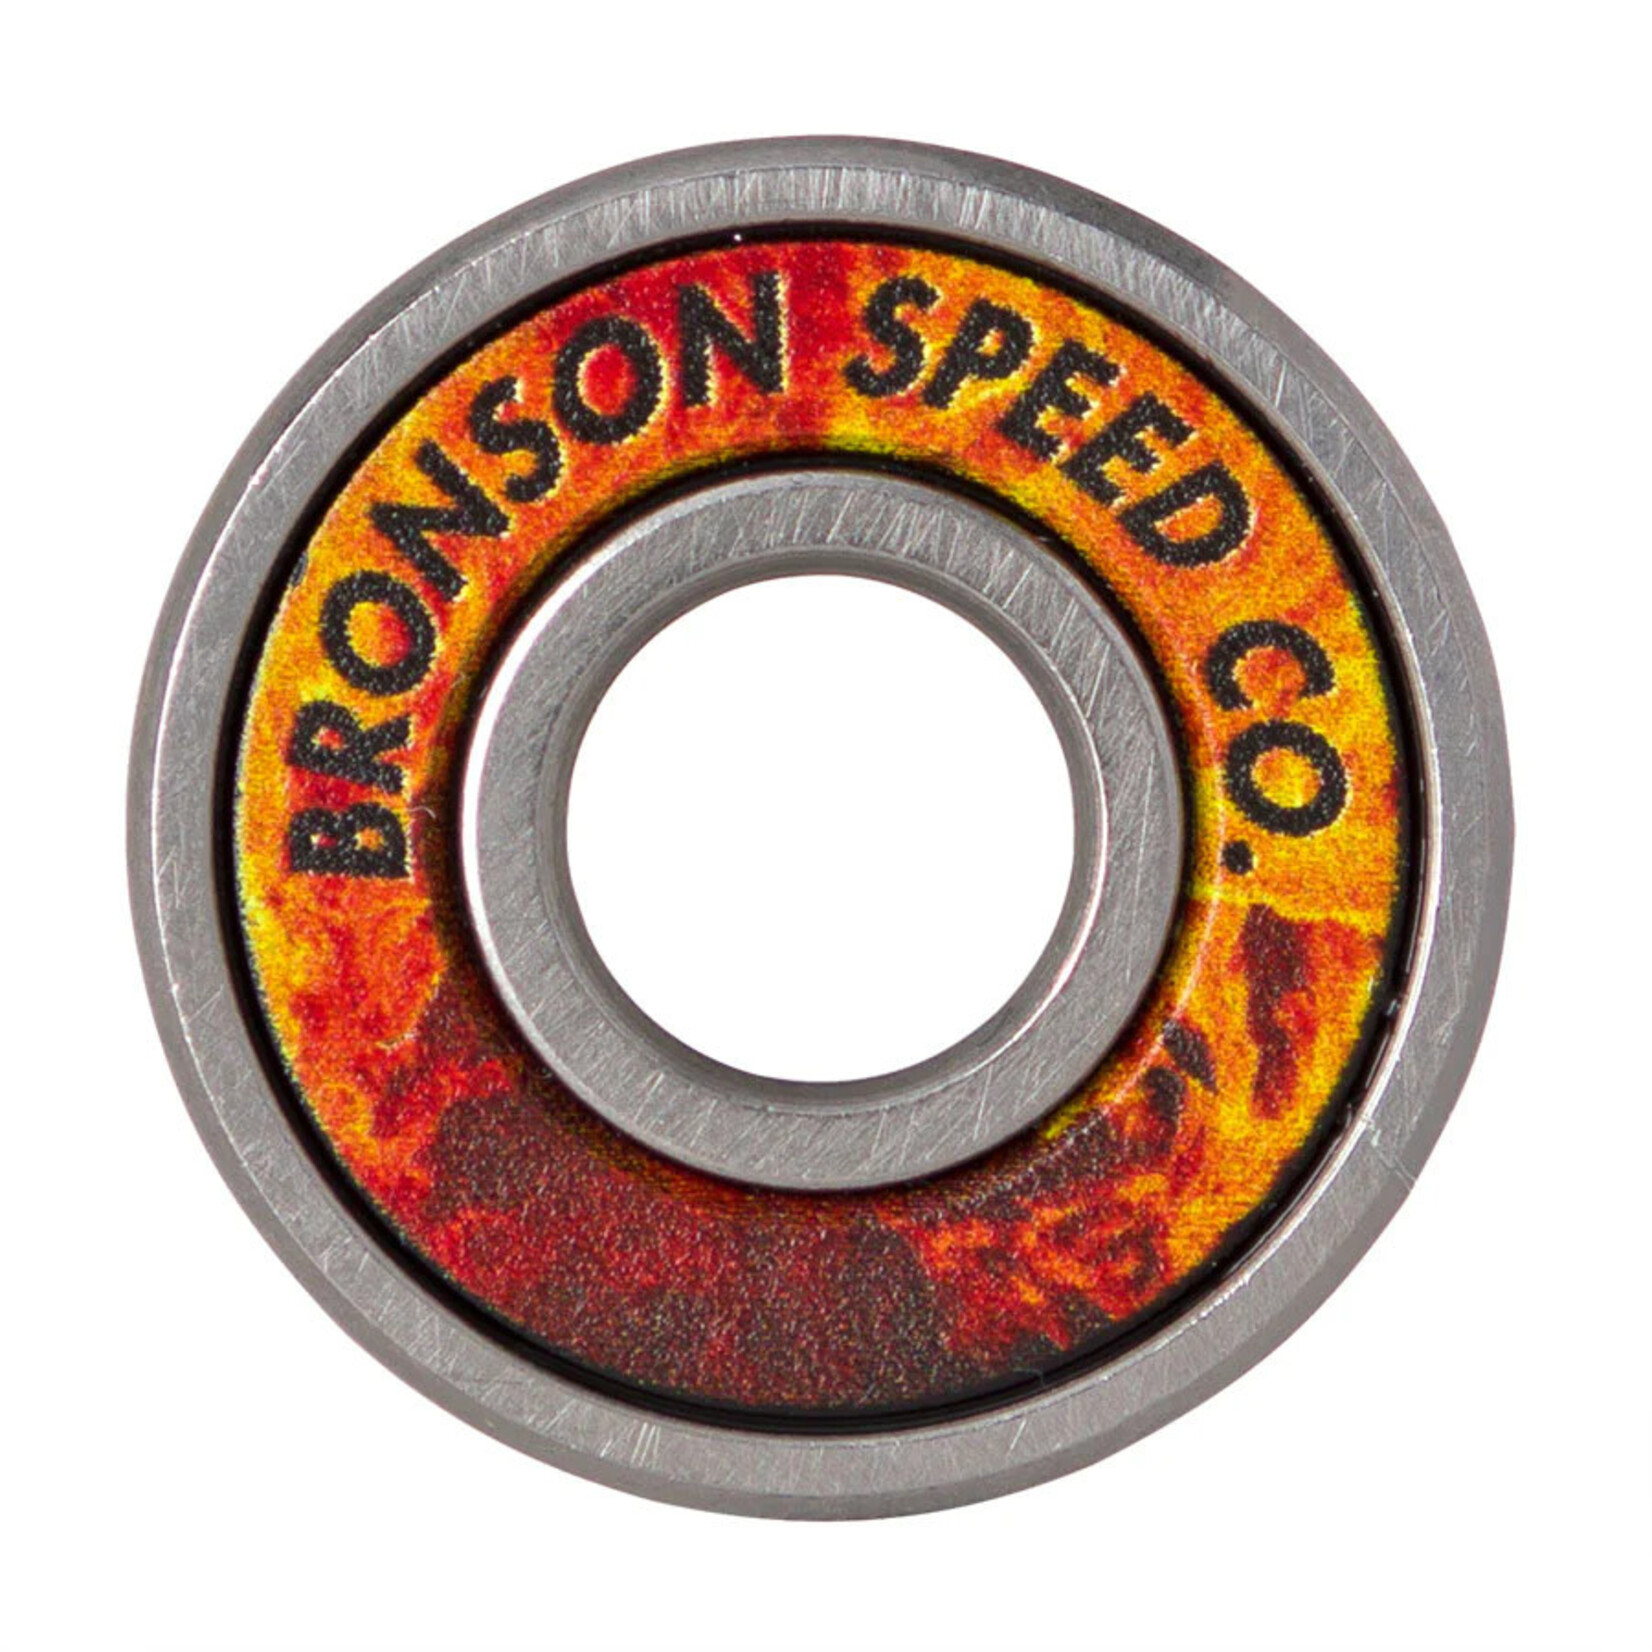 Bronson Speed Co. Bronson Speed Co. Pedro Delfino Pro G3 Bearing- Fire